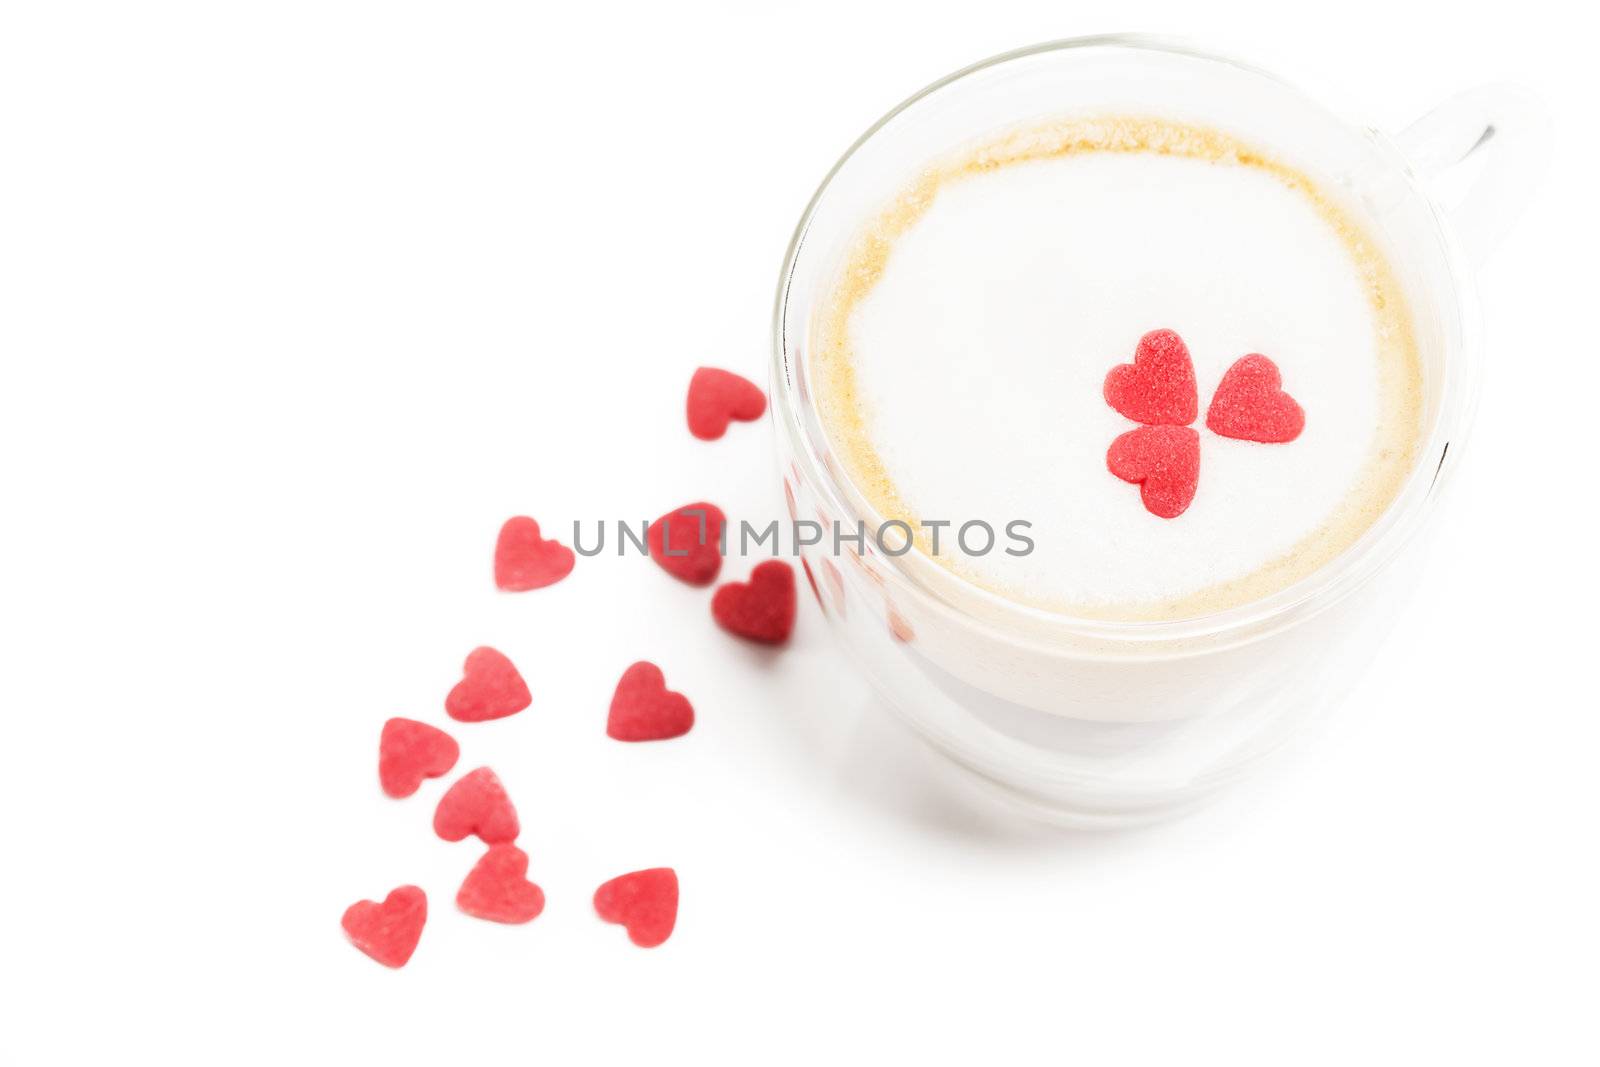 sugar hearts on espresso with milk foam by RobStark